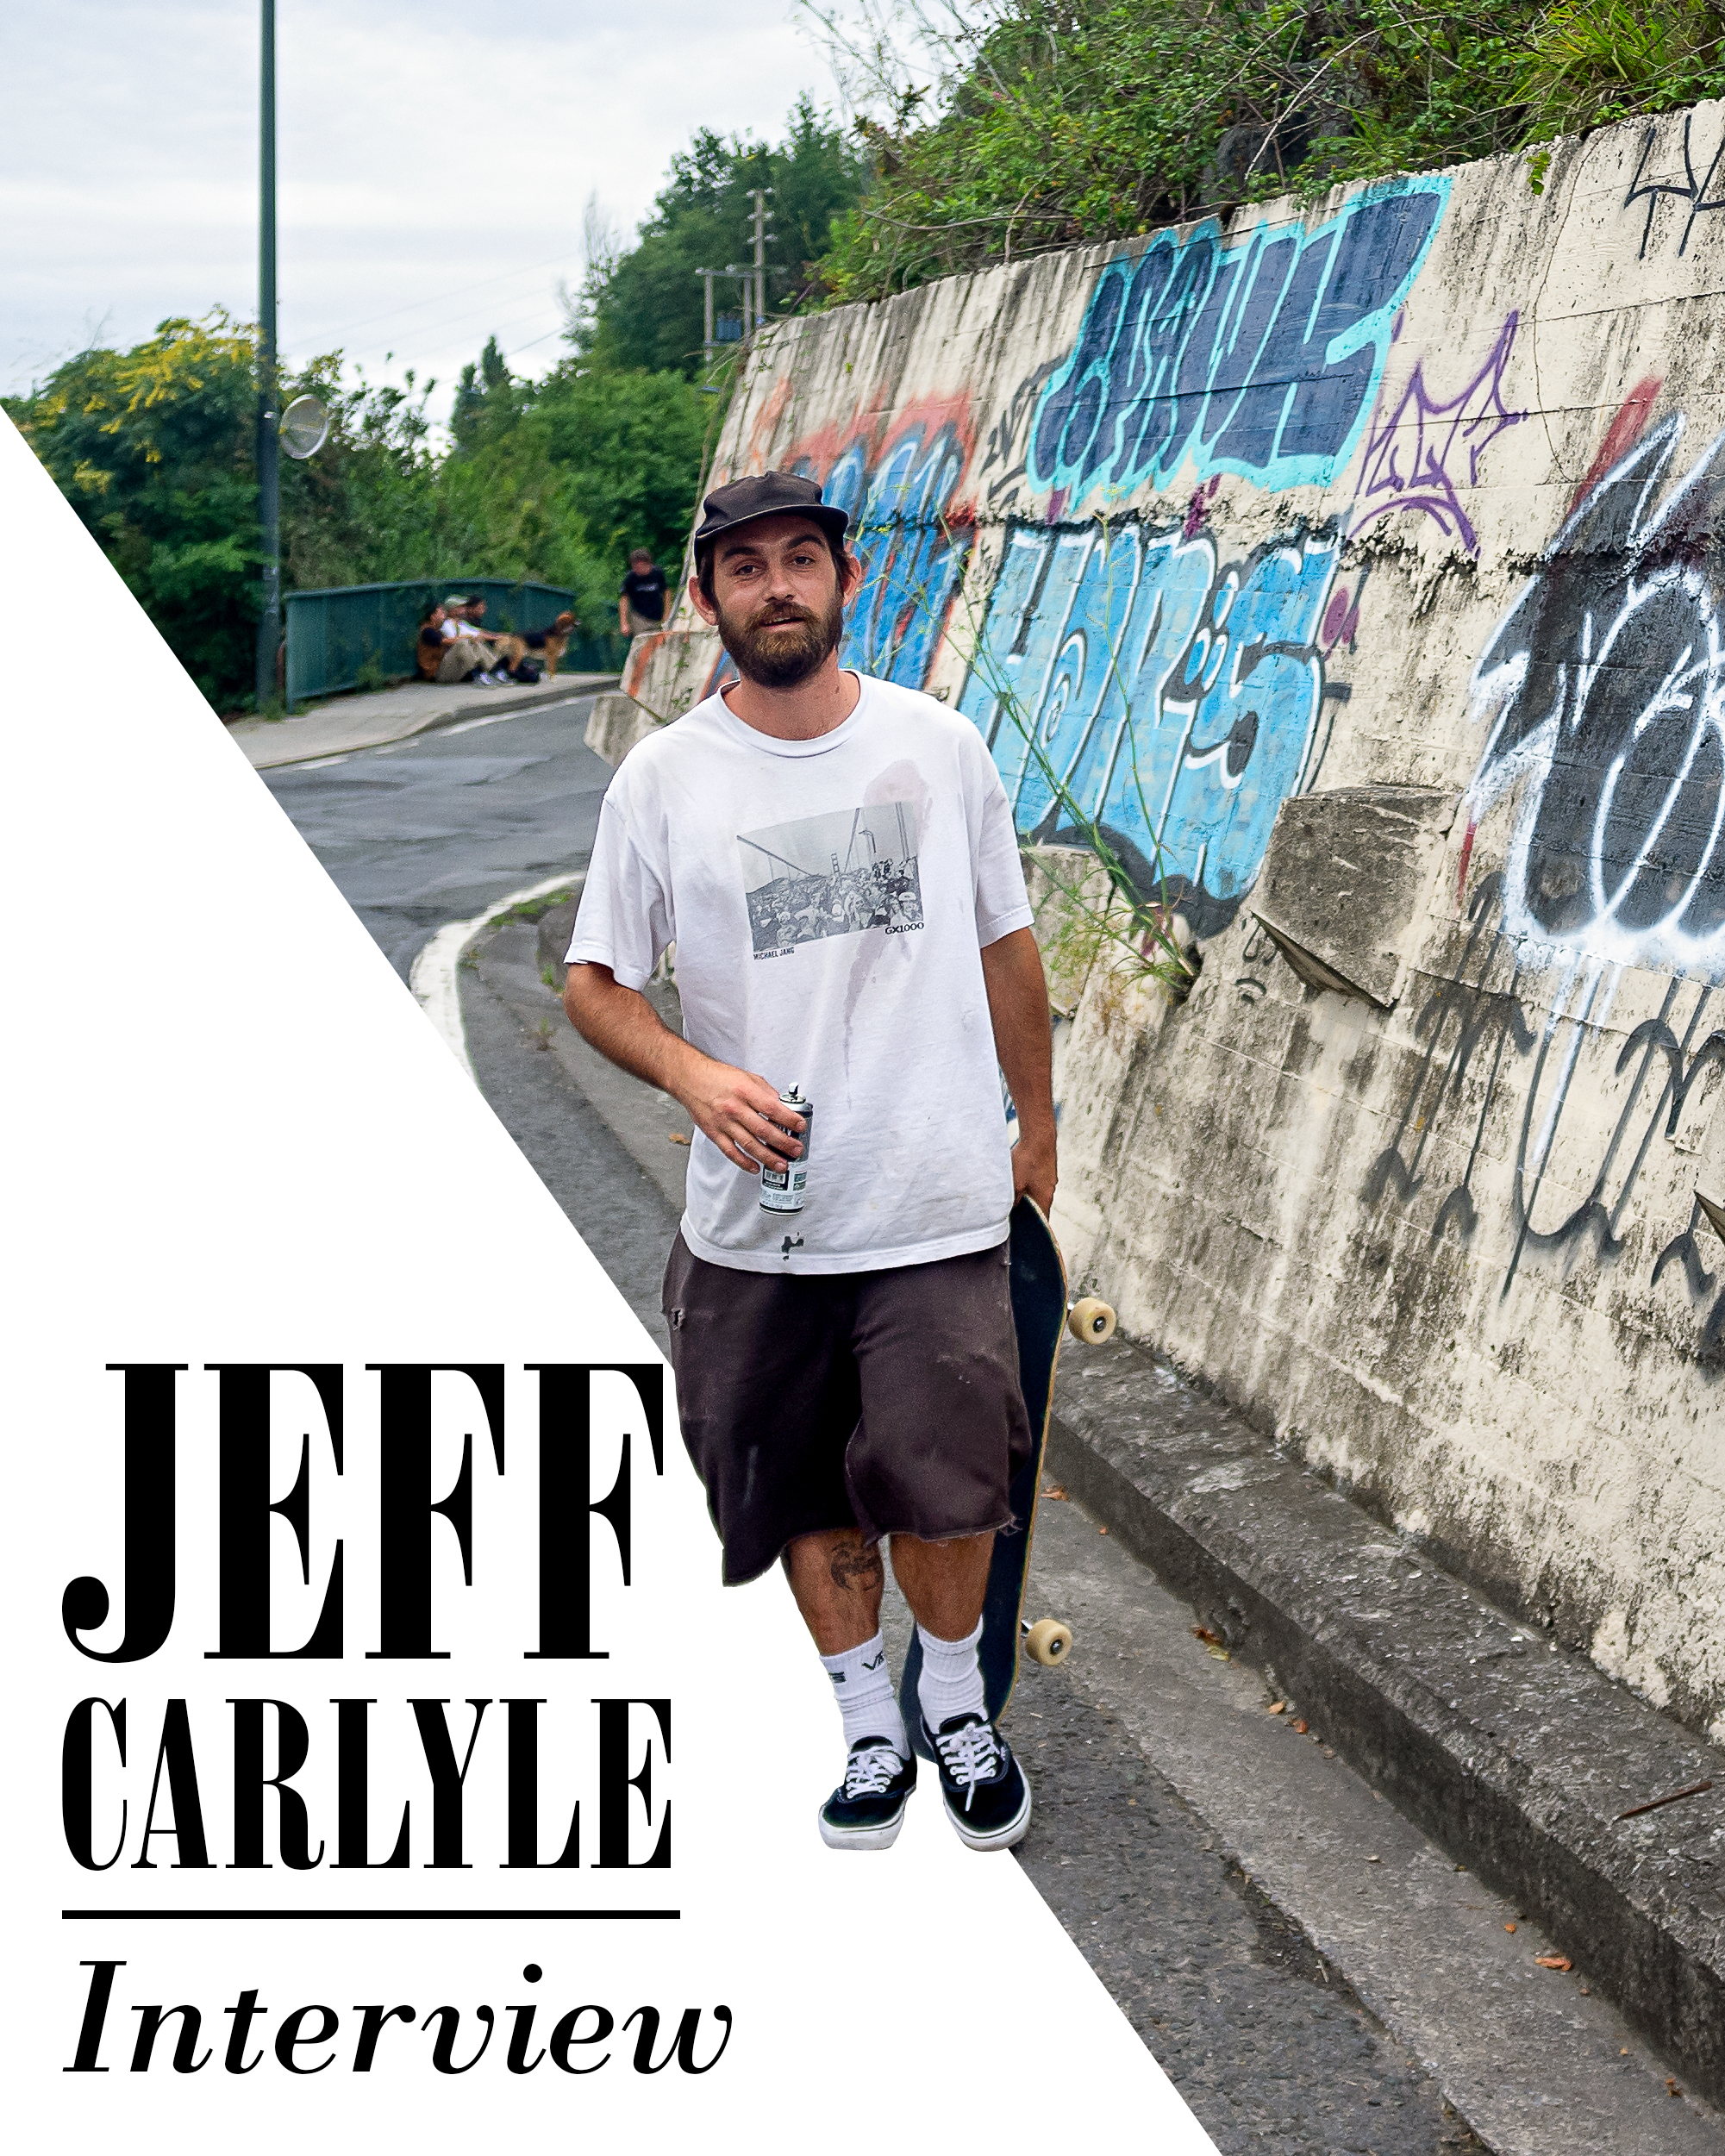 Jeff Carclyle Interview Subhead DSF7044 by GERARD RIERA DZ 2000